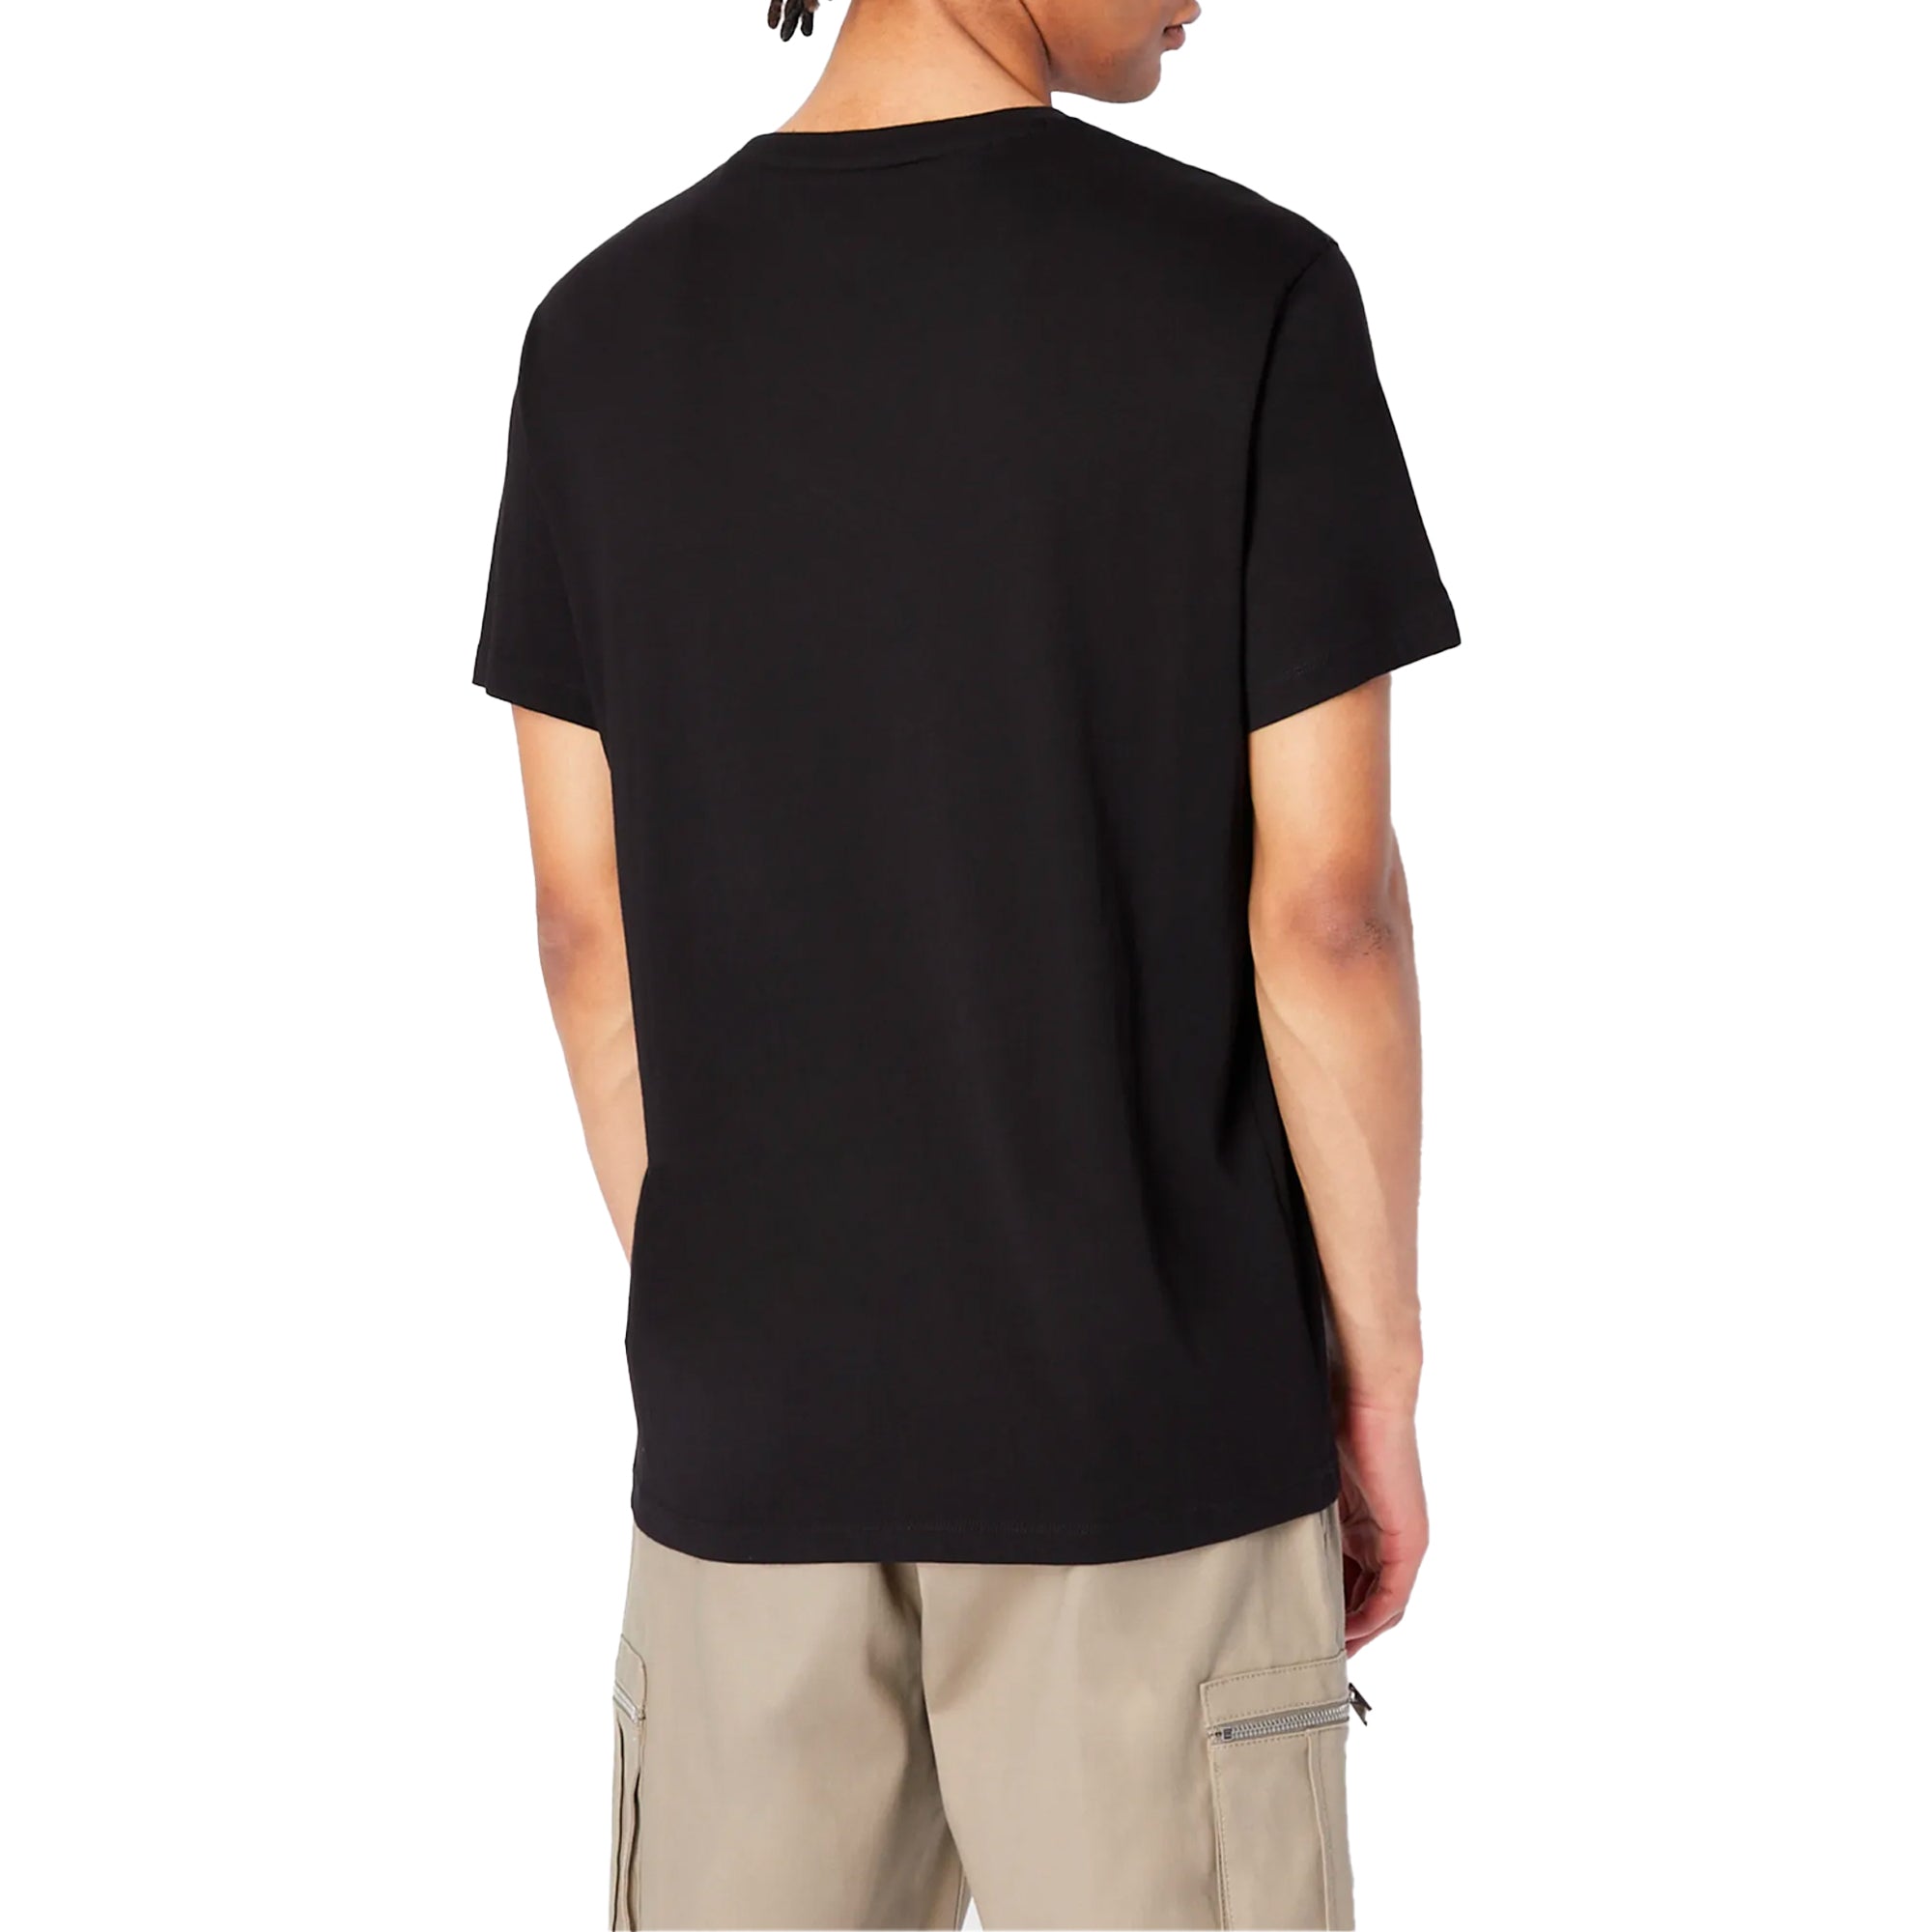 Armani Exchange 8NZT91 Logo T-Shirt - Black